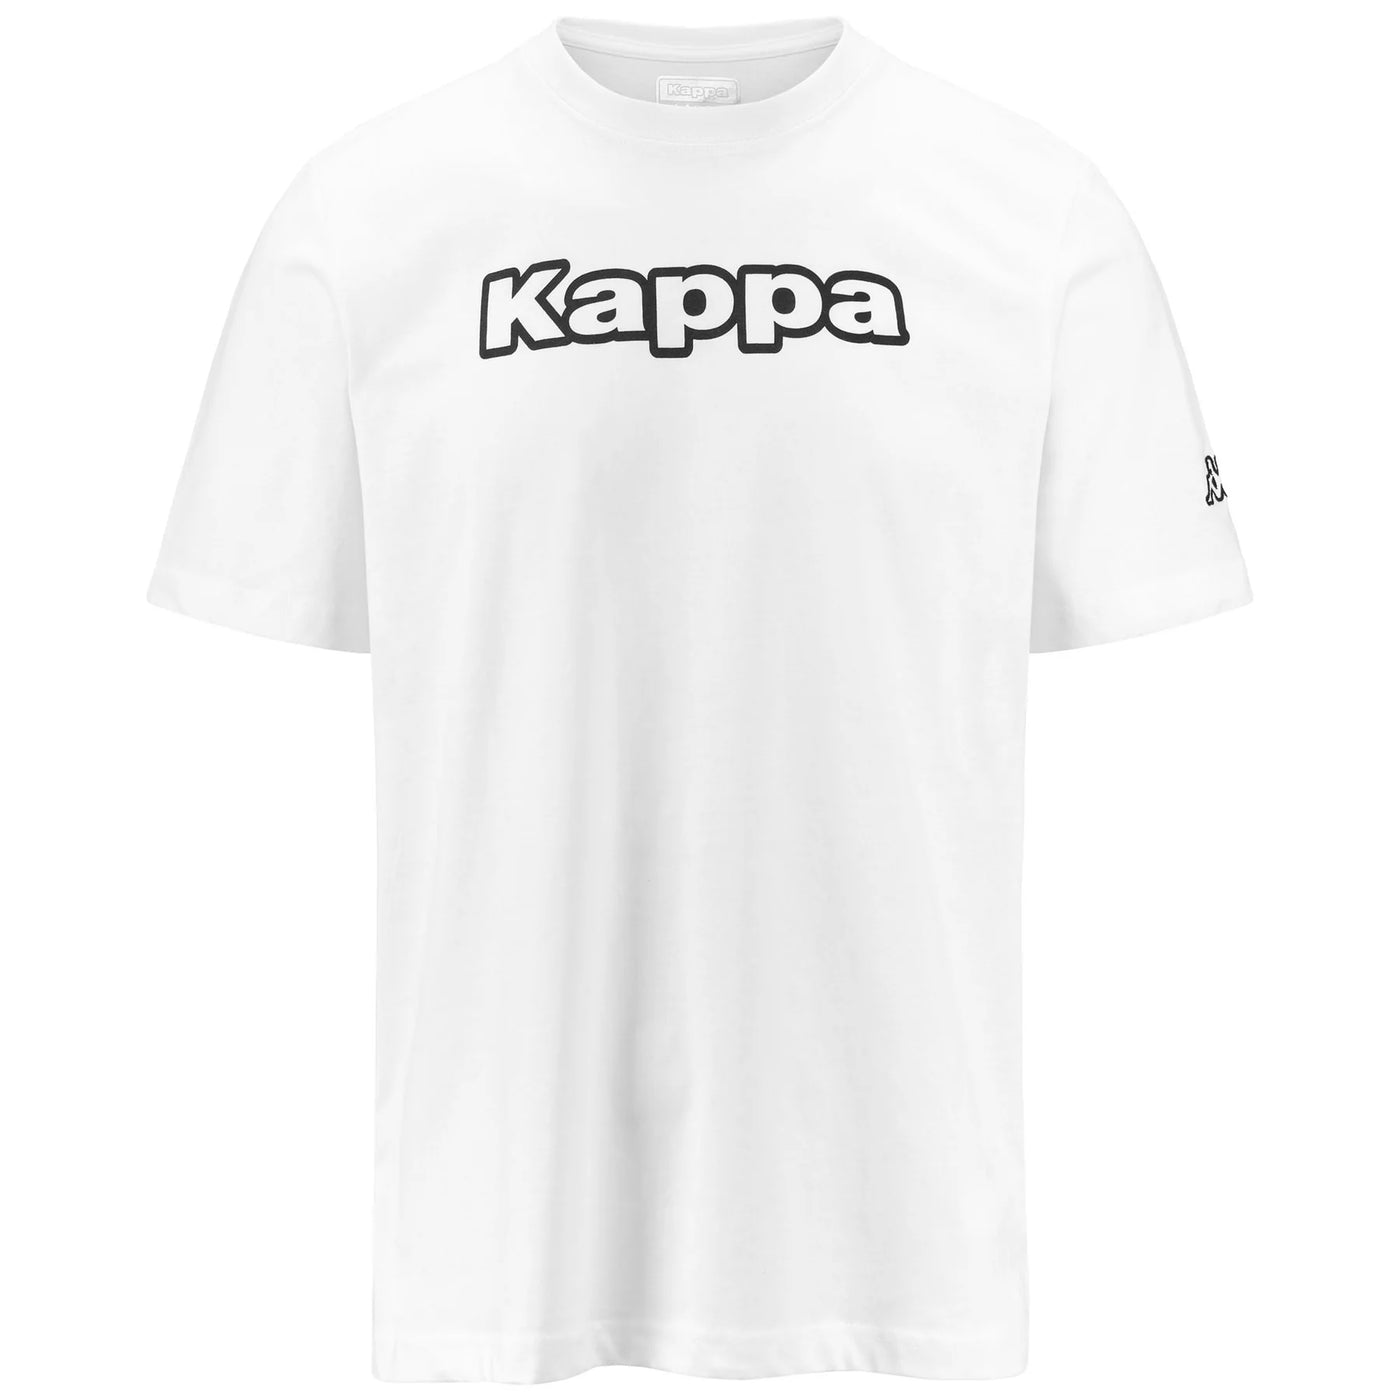 303HZ60-001 - T-Shirt - Kappa